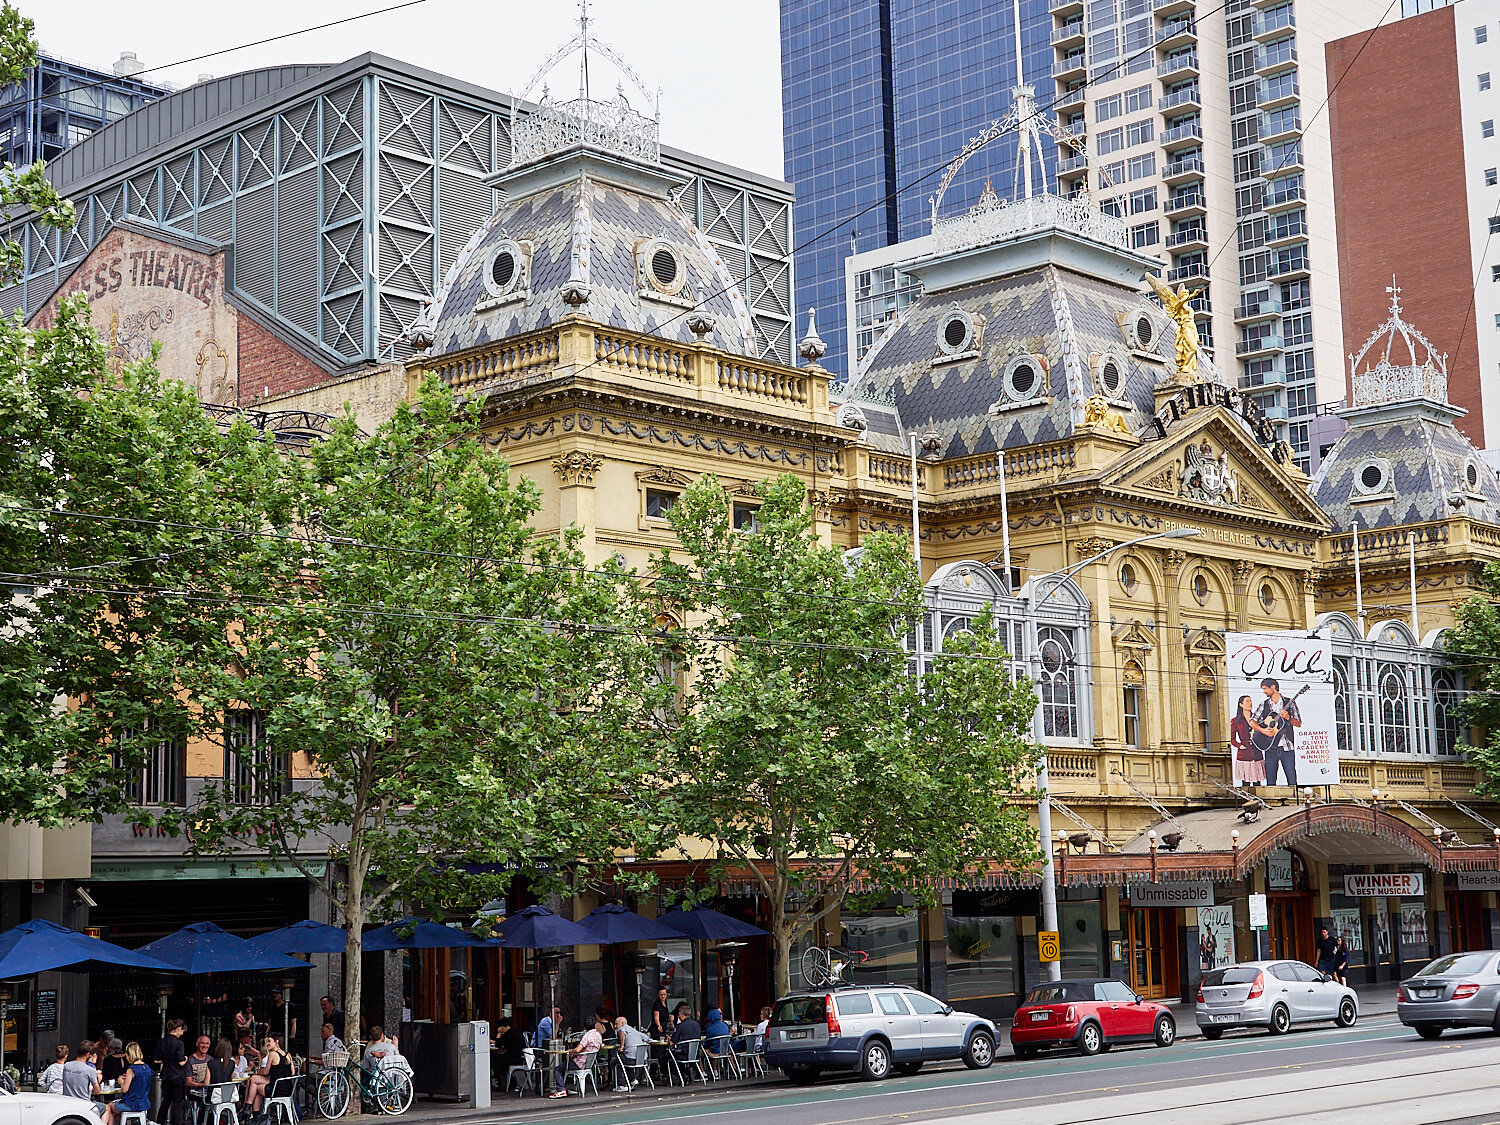 Princess Theatre - Melbourne